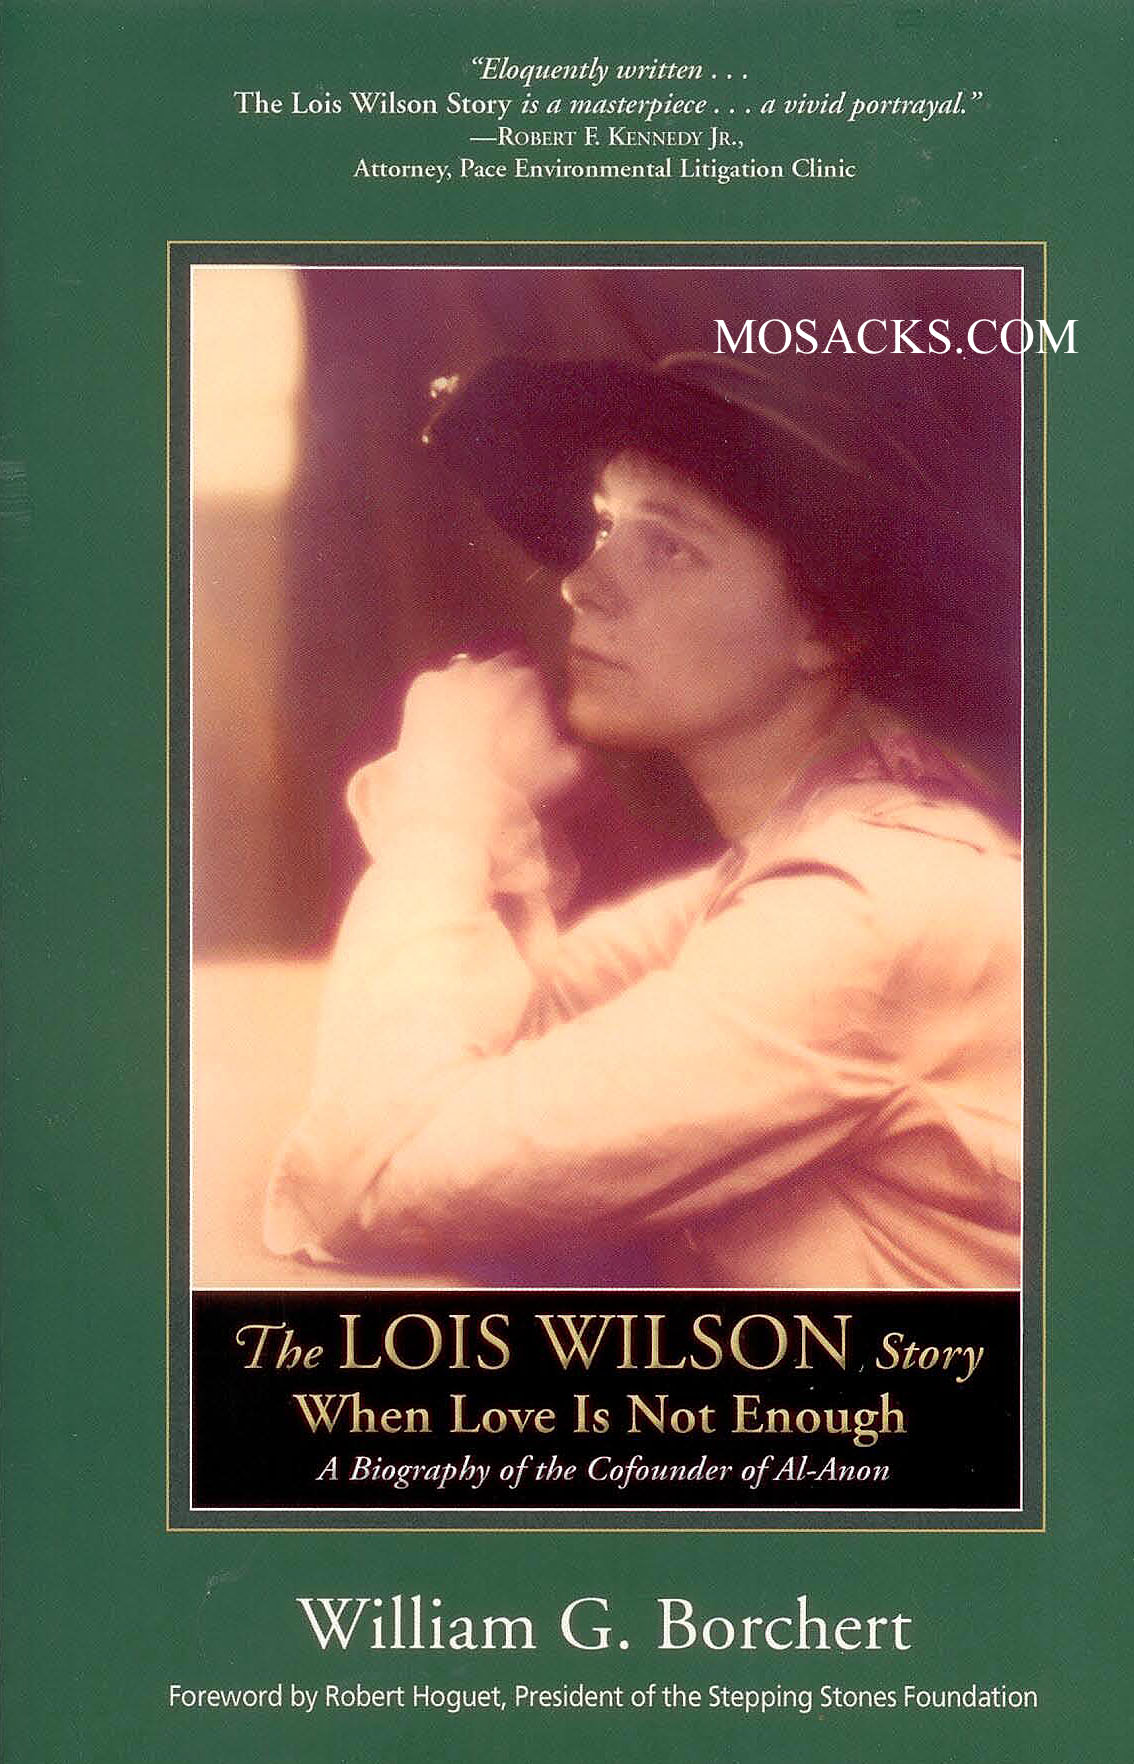 The Lois Wilson Story by William G. Borchert